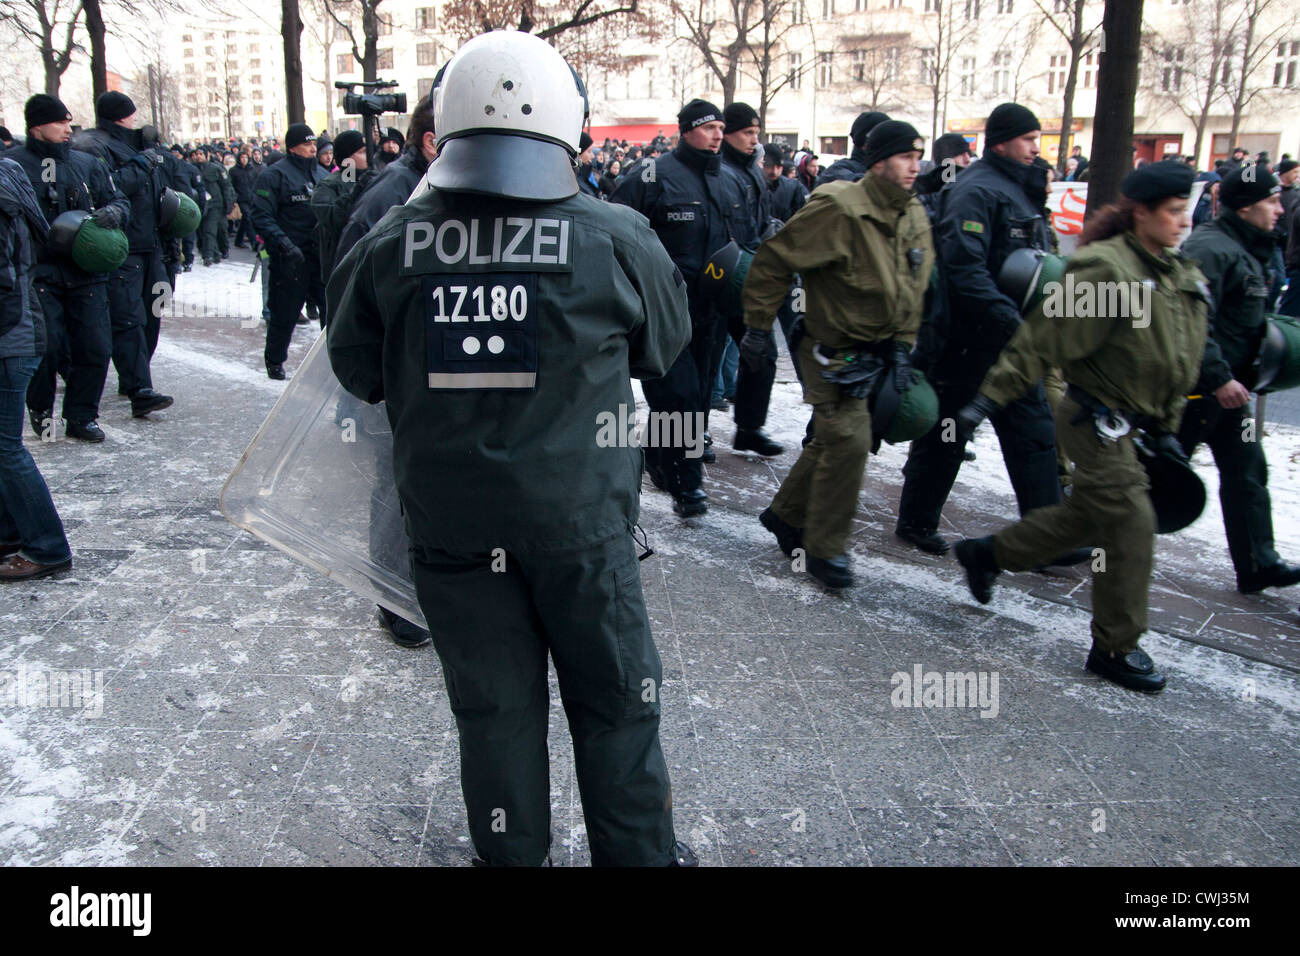 Police Polizei Demonstration Berlin Germany Stock Photo